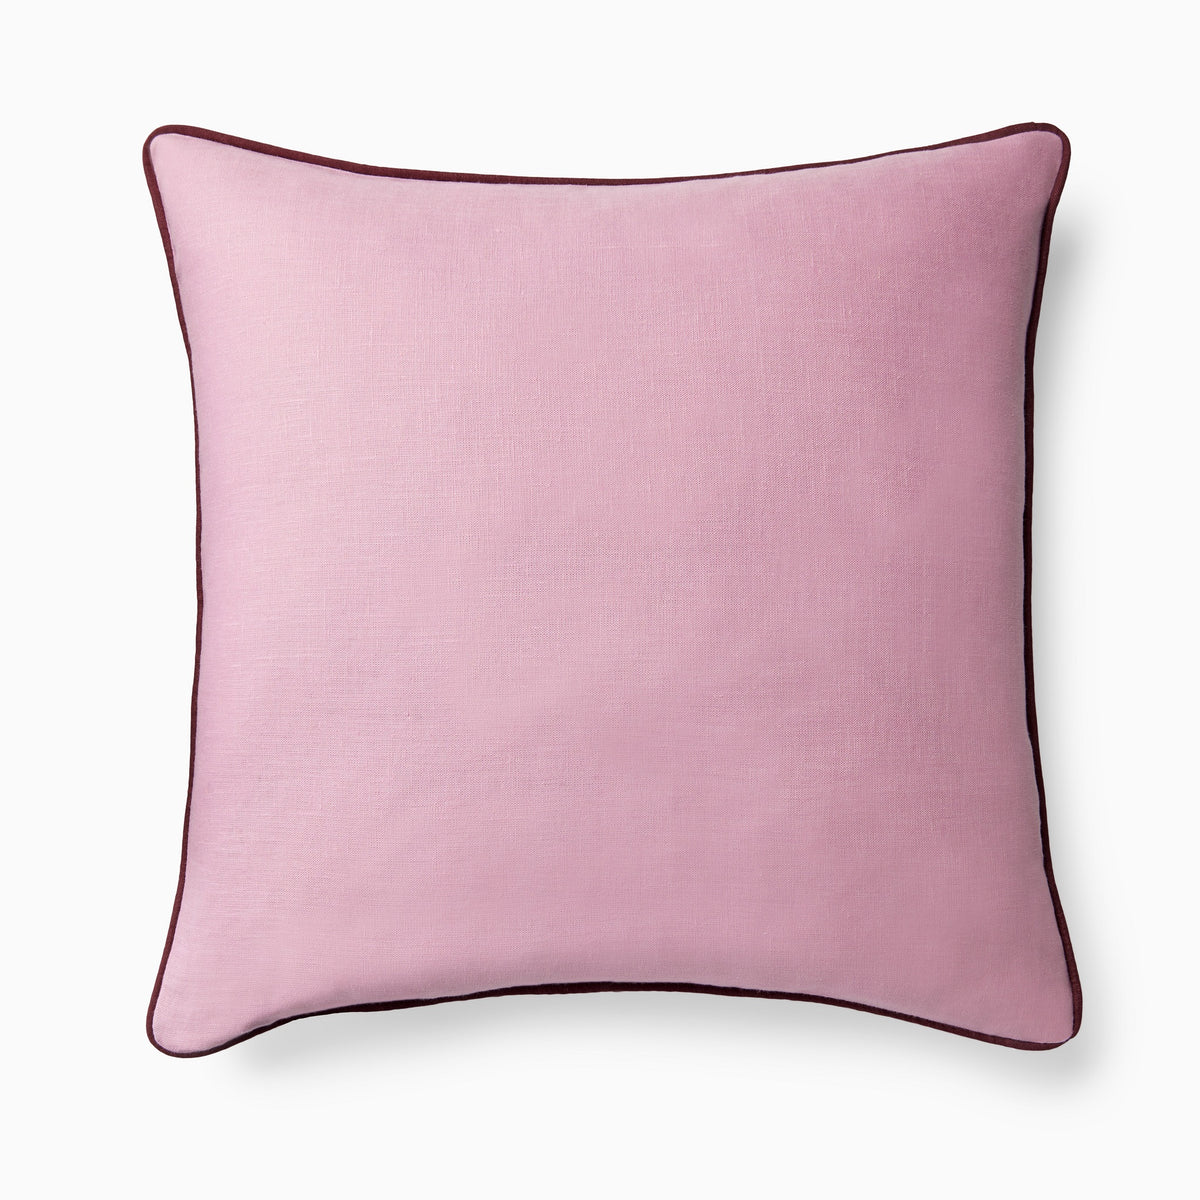 Clear Image of Sferra Manarola Decorative Pillow in Pink/Merlot Front